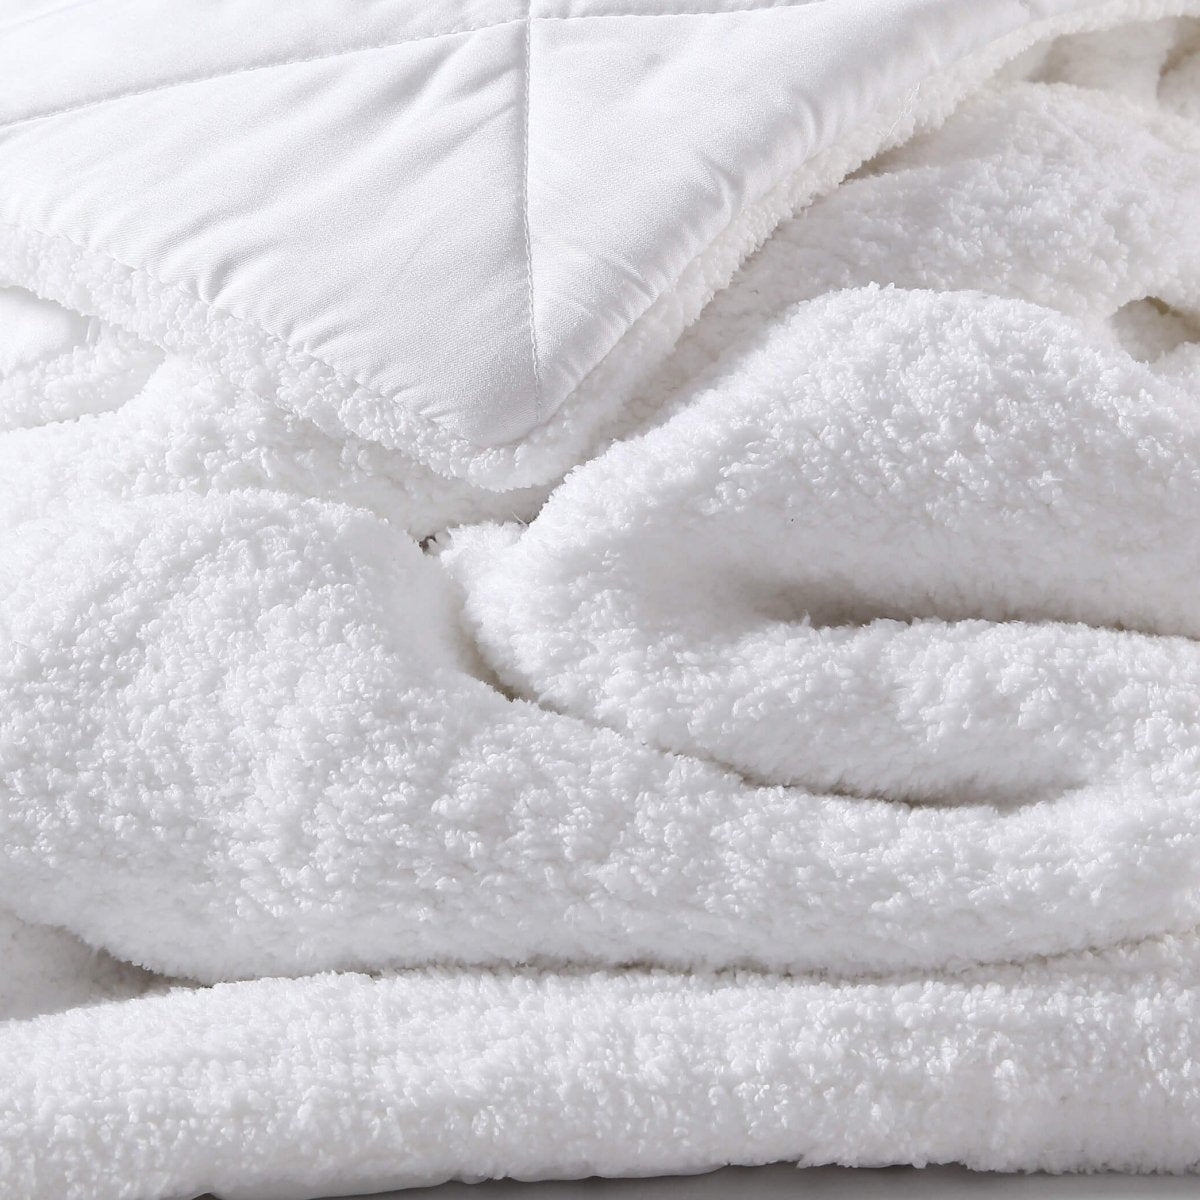 Sunday Citizen Snug Cooling Comforter - lily & onyx